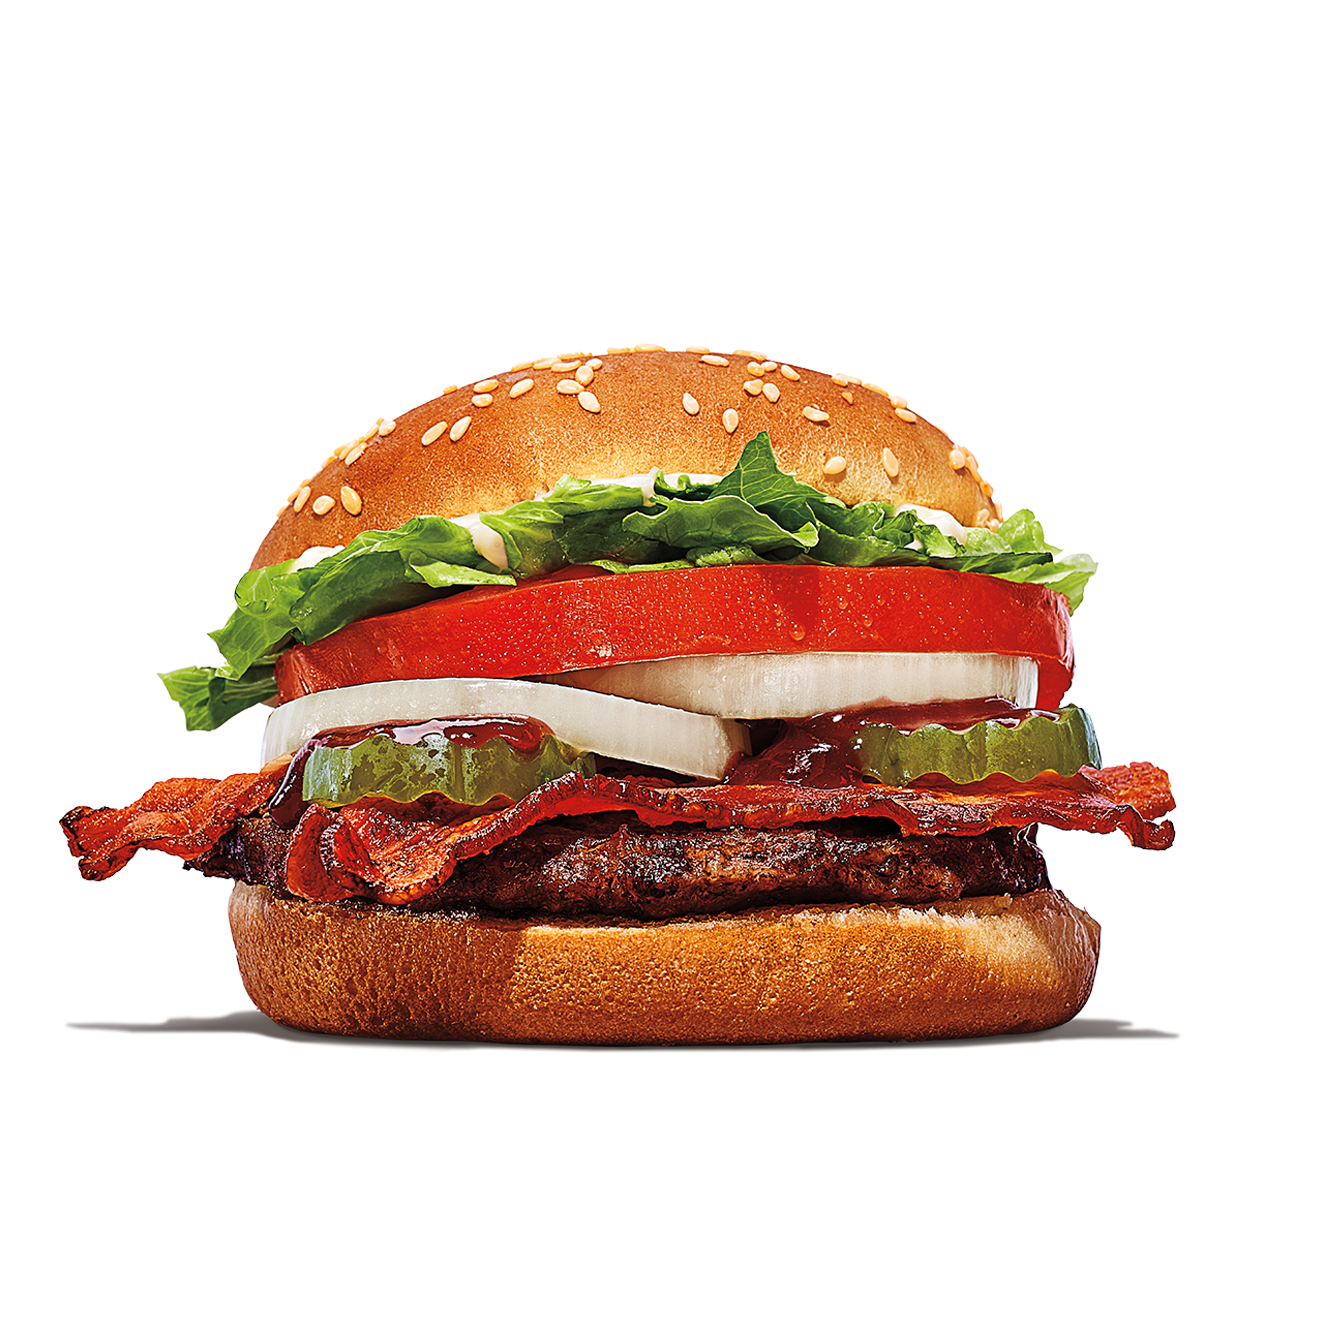 Burger King Laredo (956)462-5092